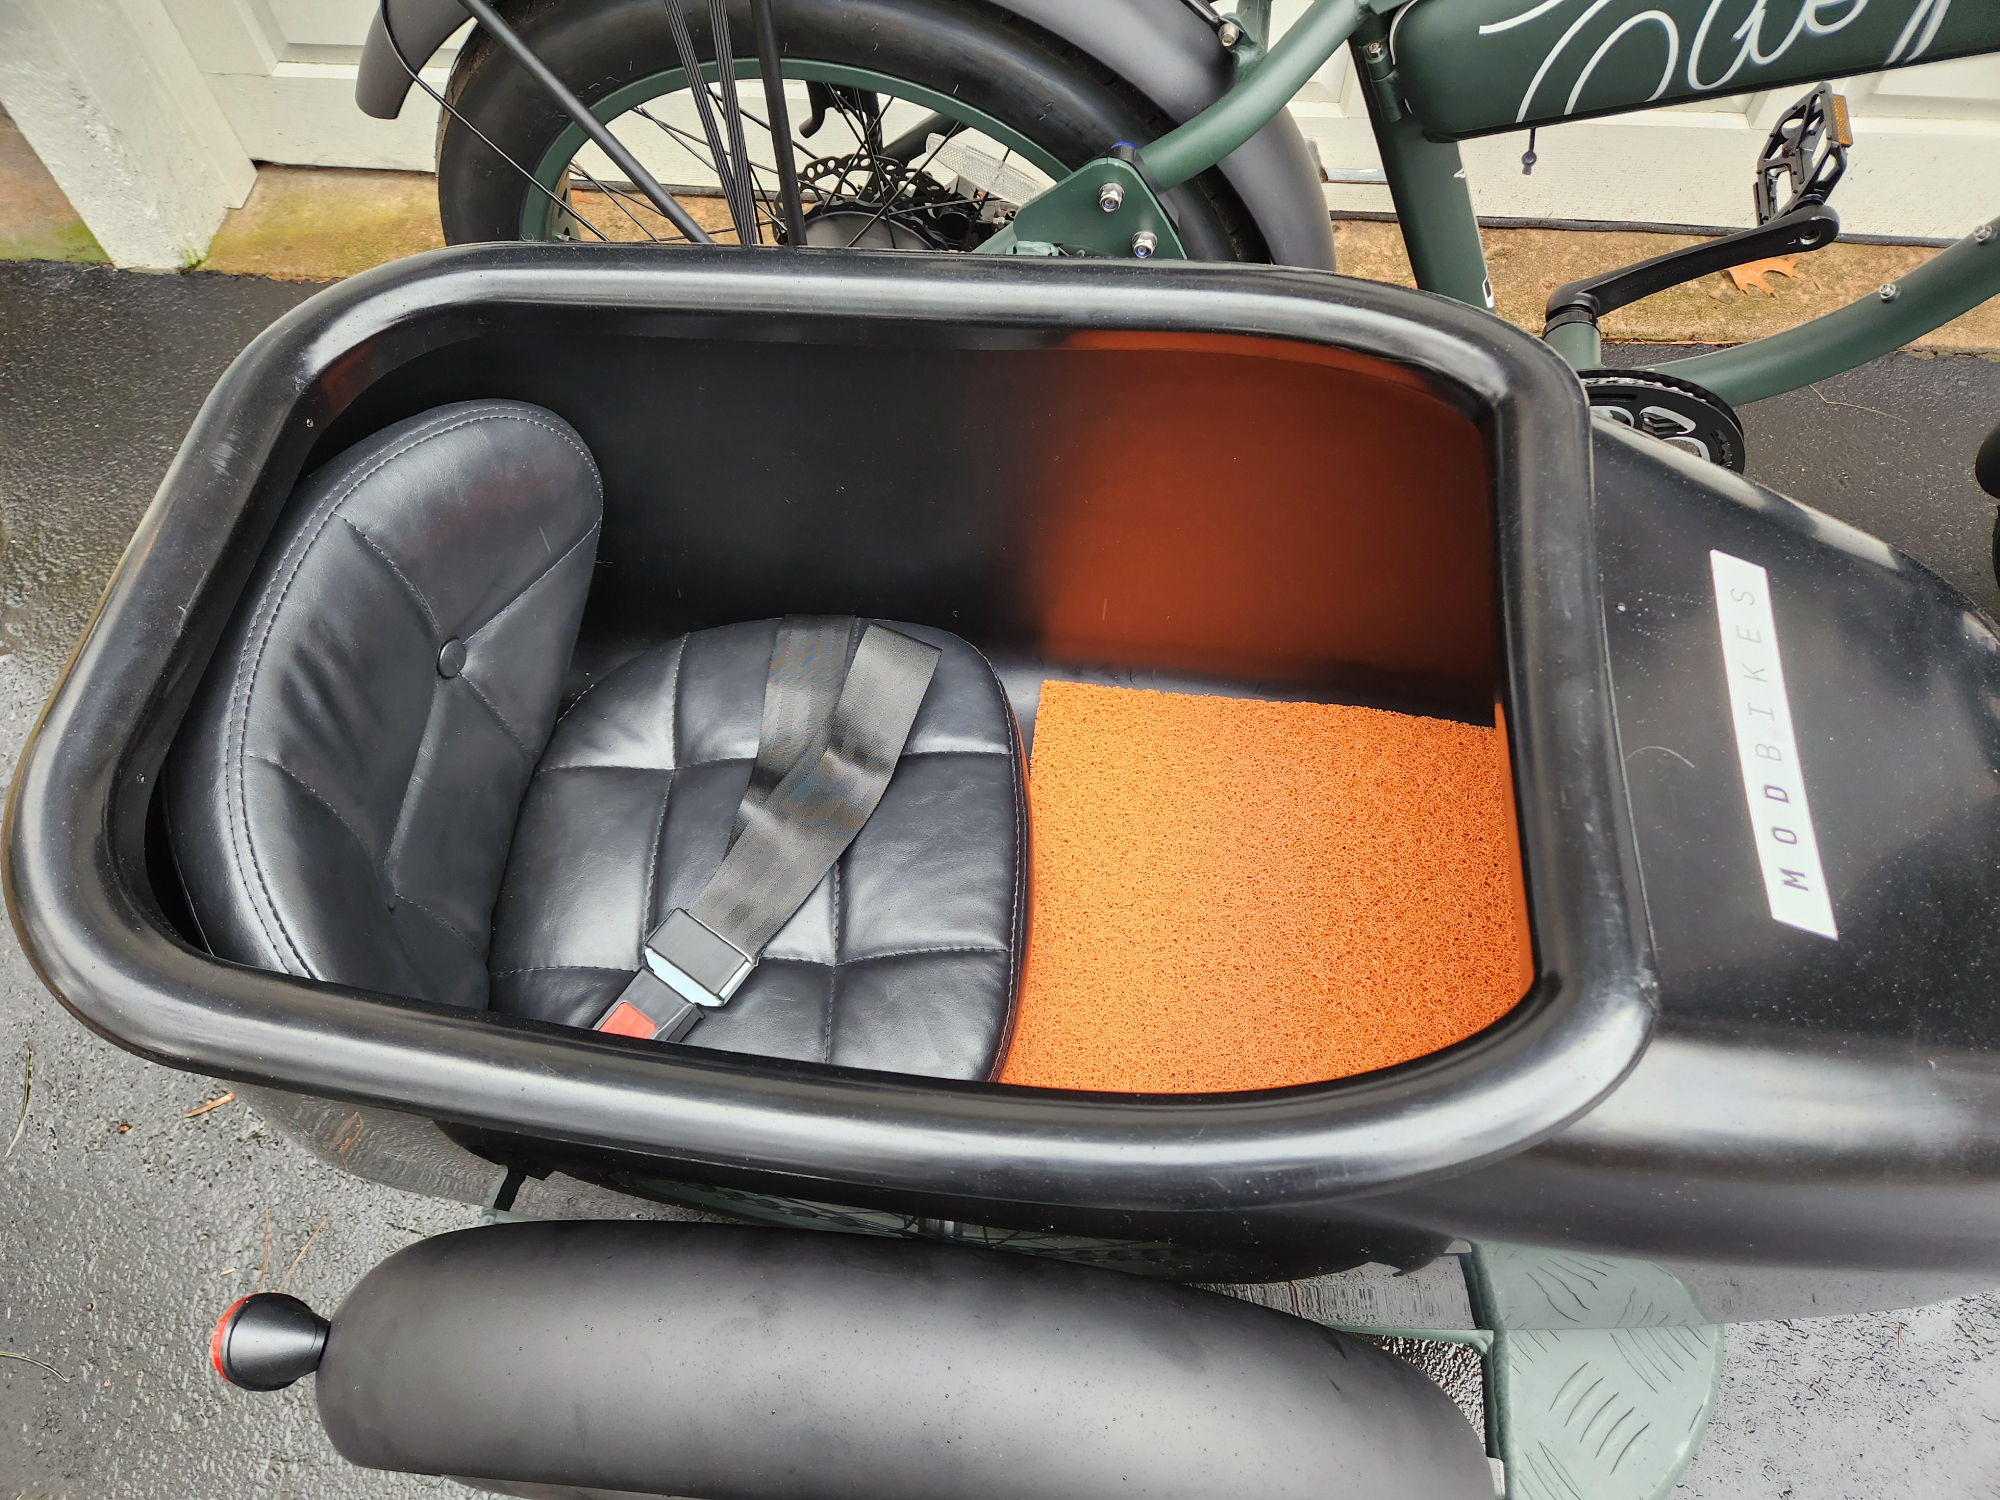 Interior sidecar view of a MOD Easy Sidecar.